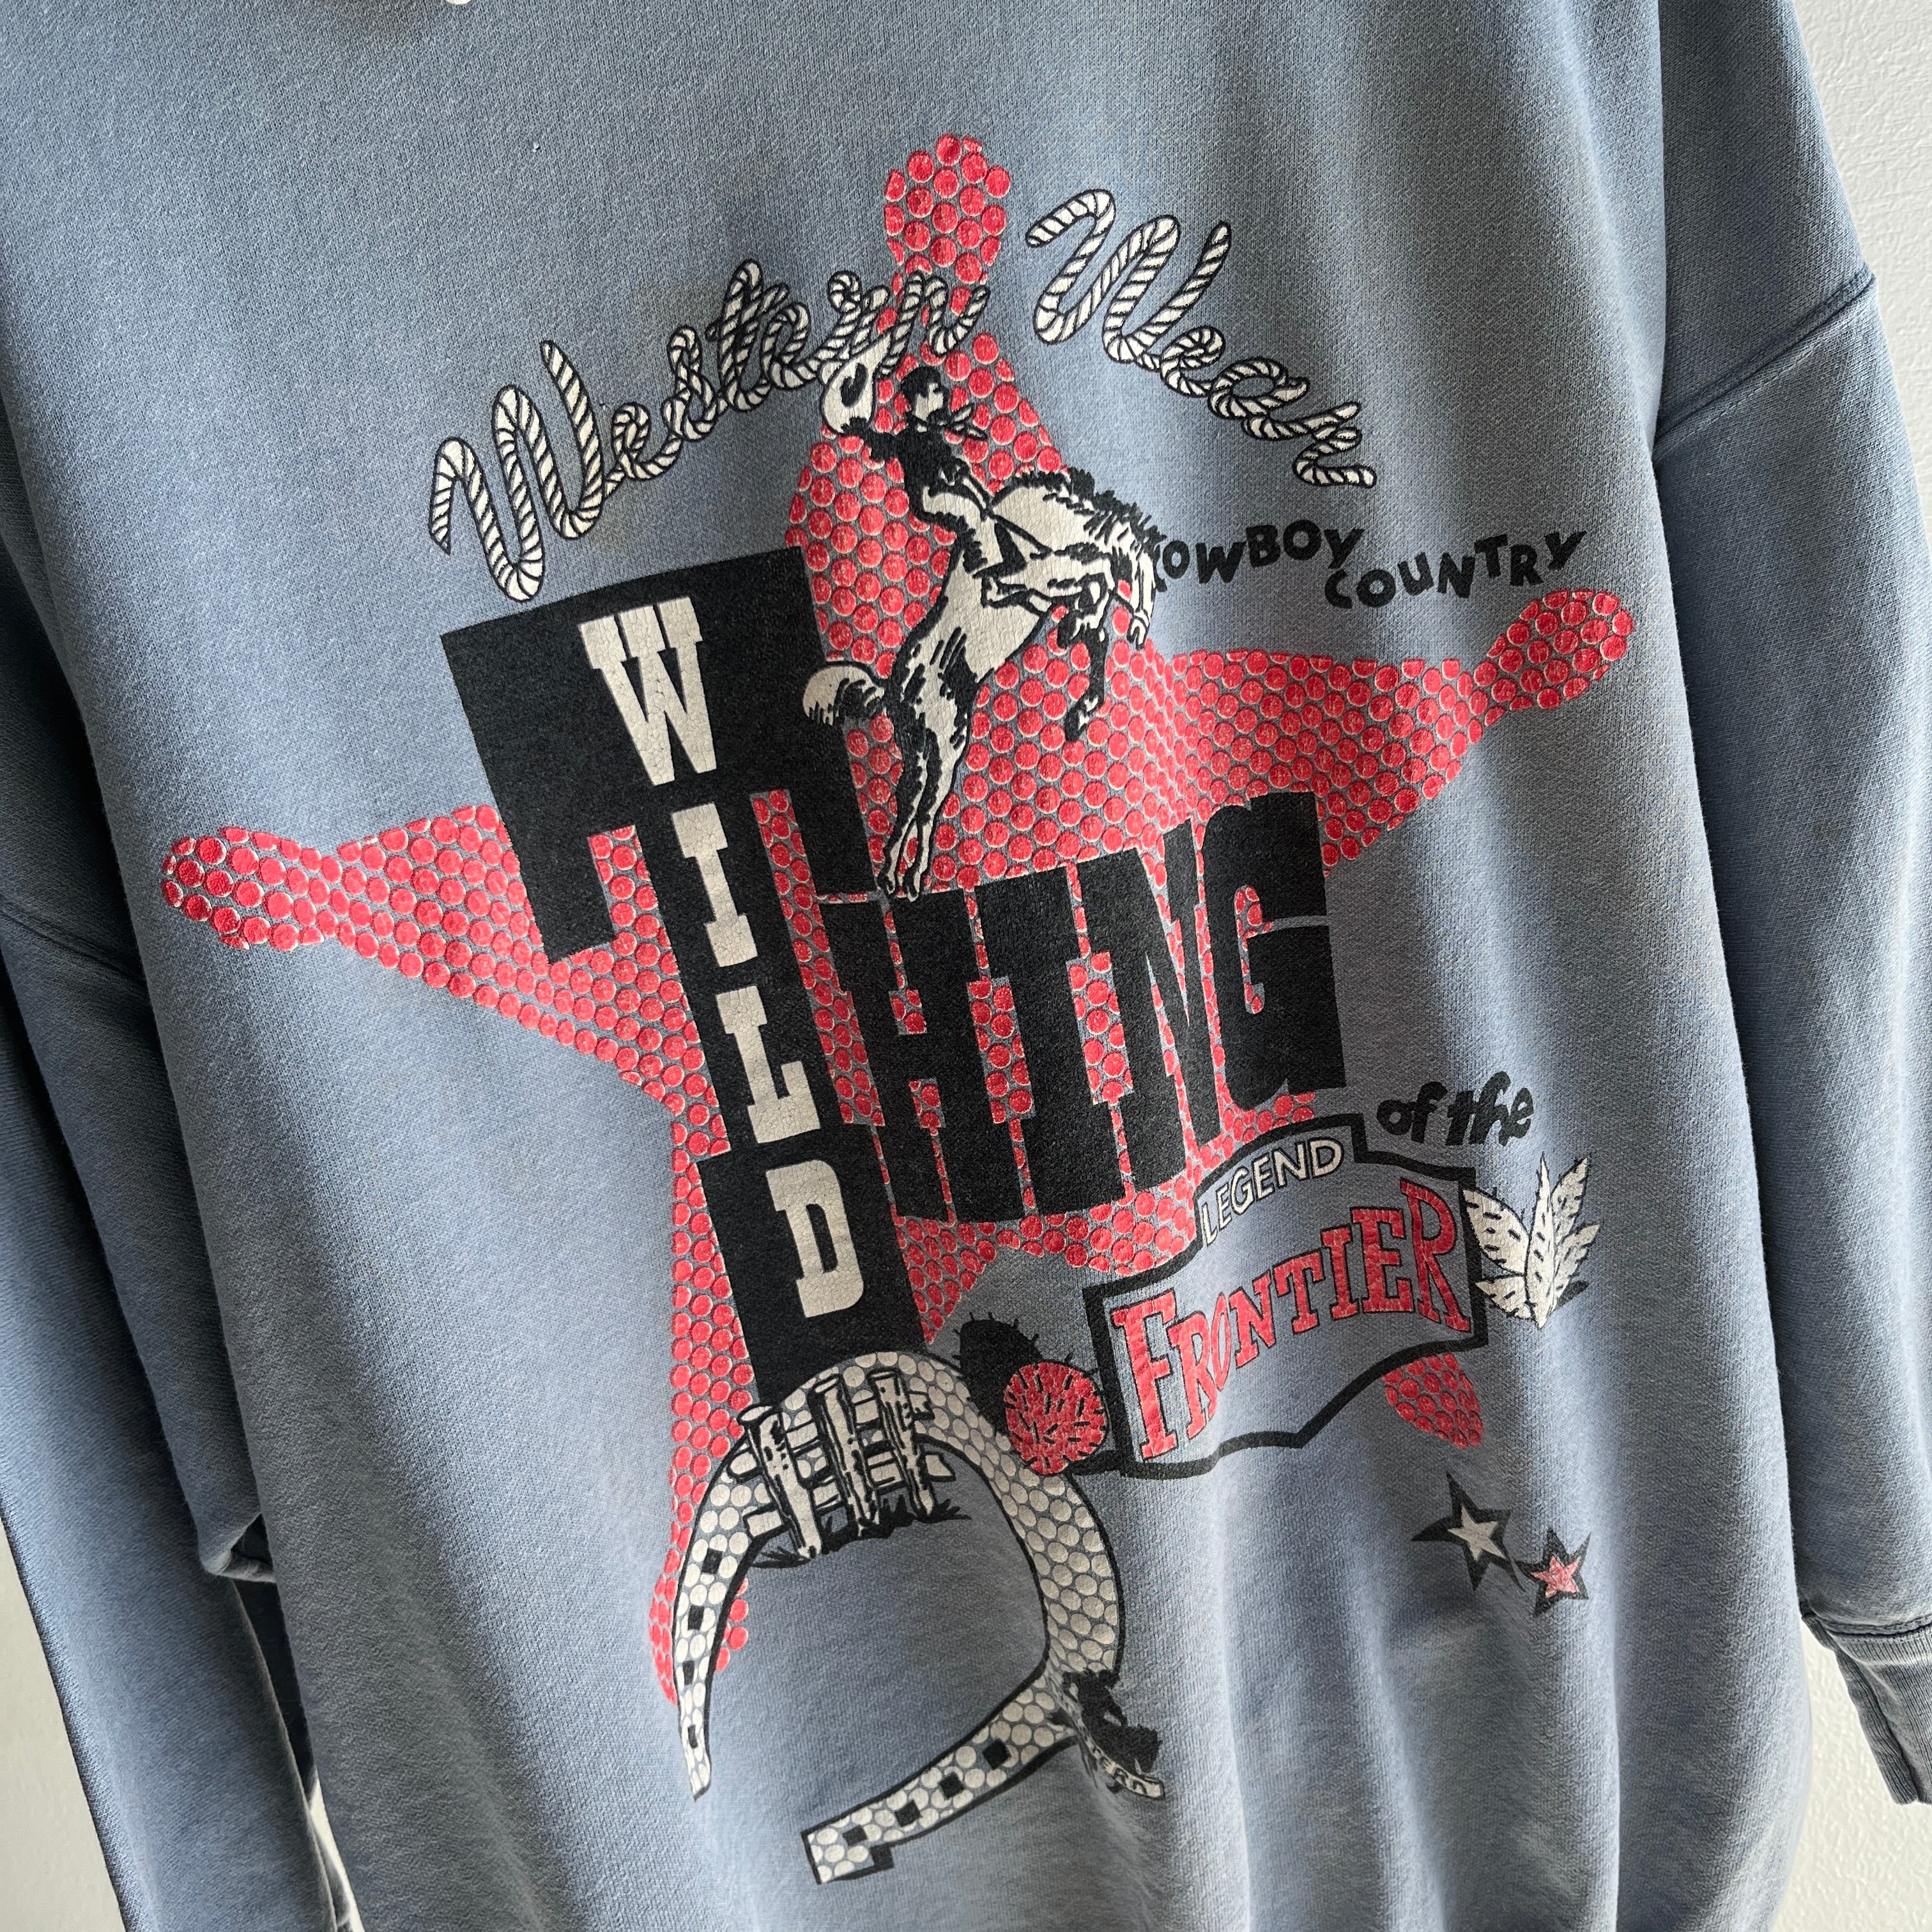 1980s Western Wear Wild Thing Polo Sweatshirt - Lots to Take in Here